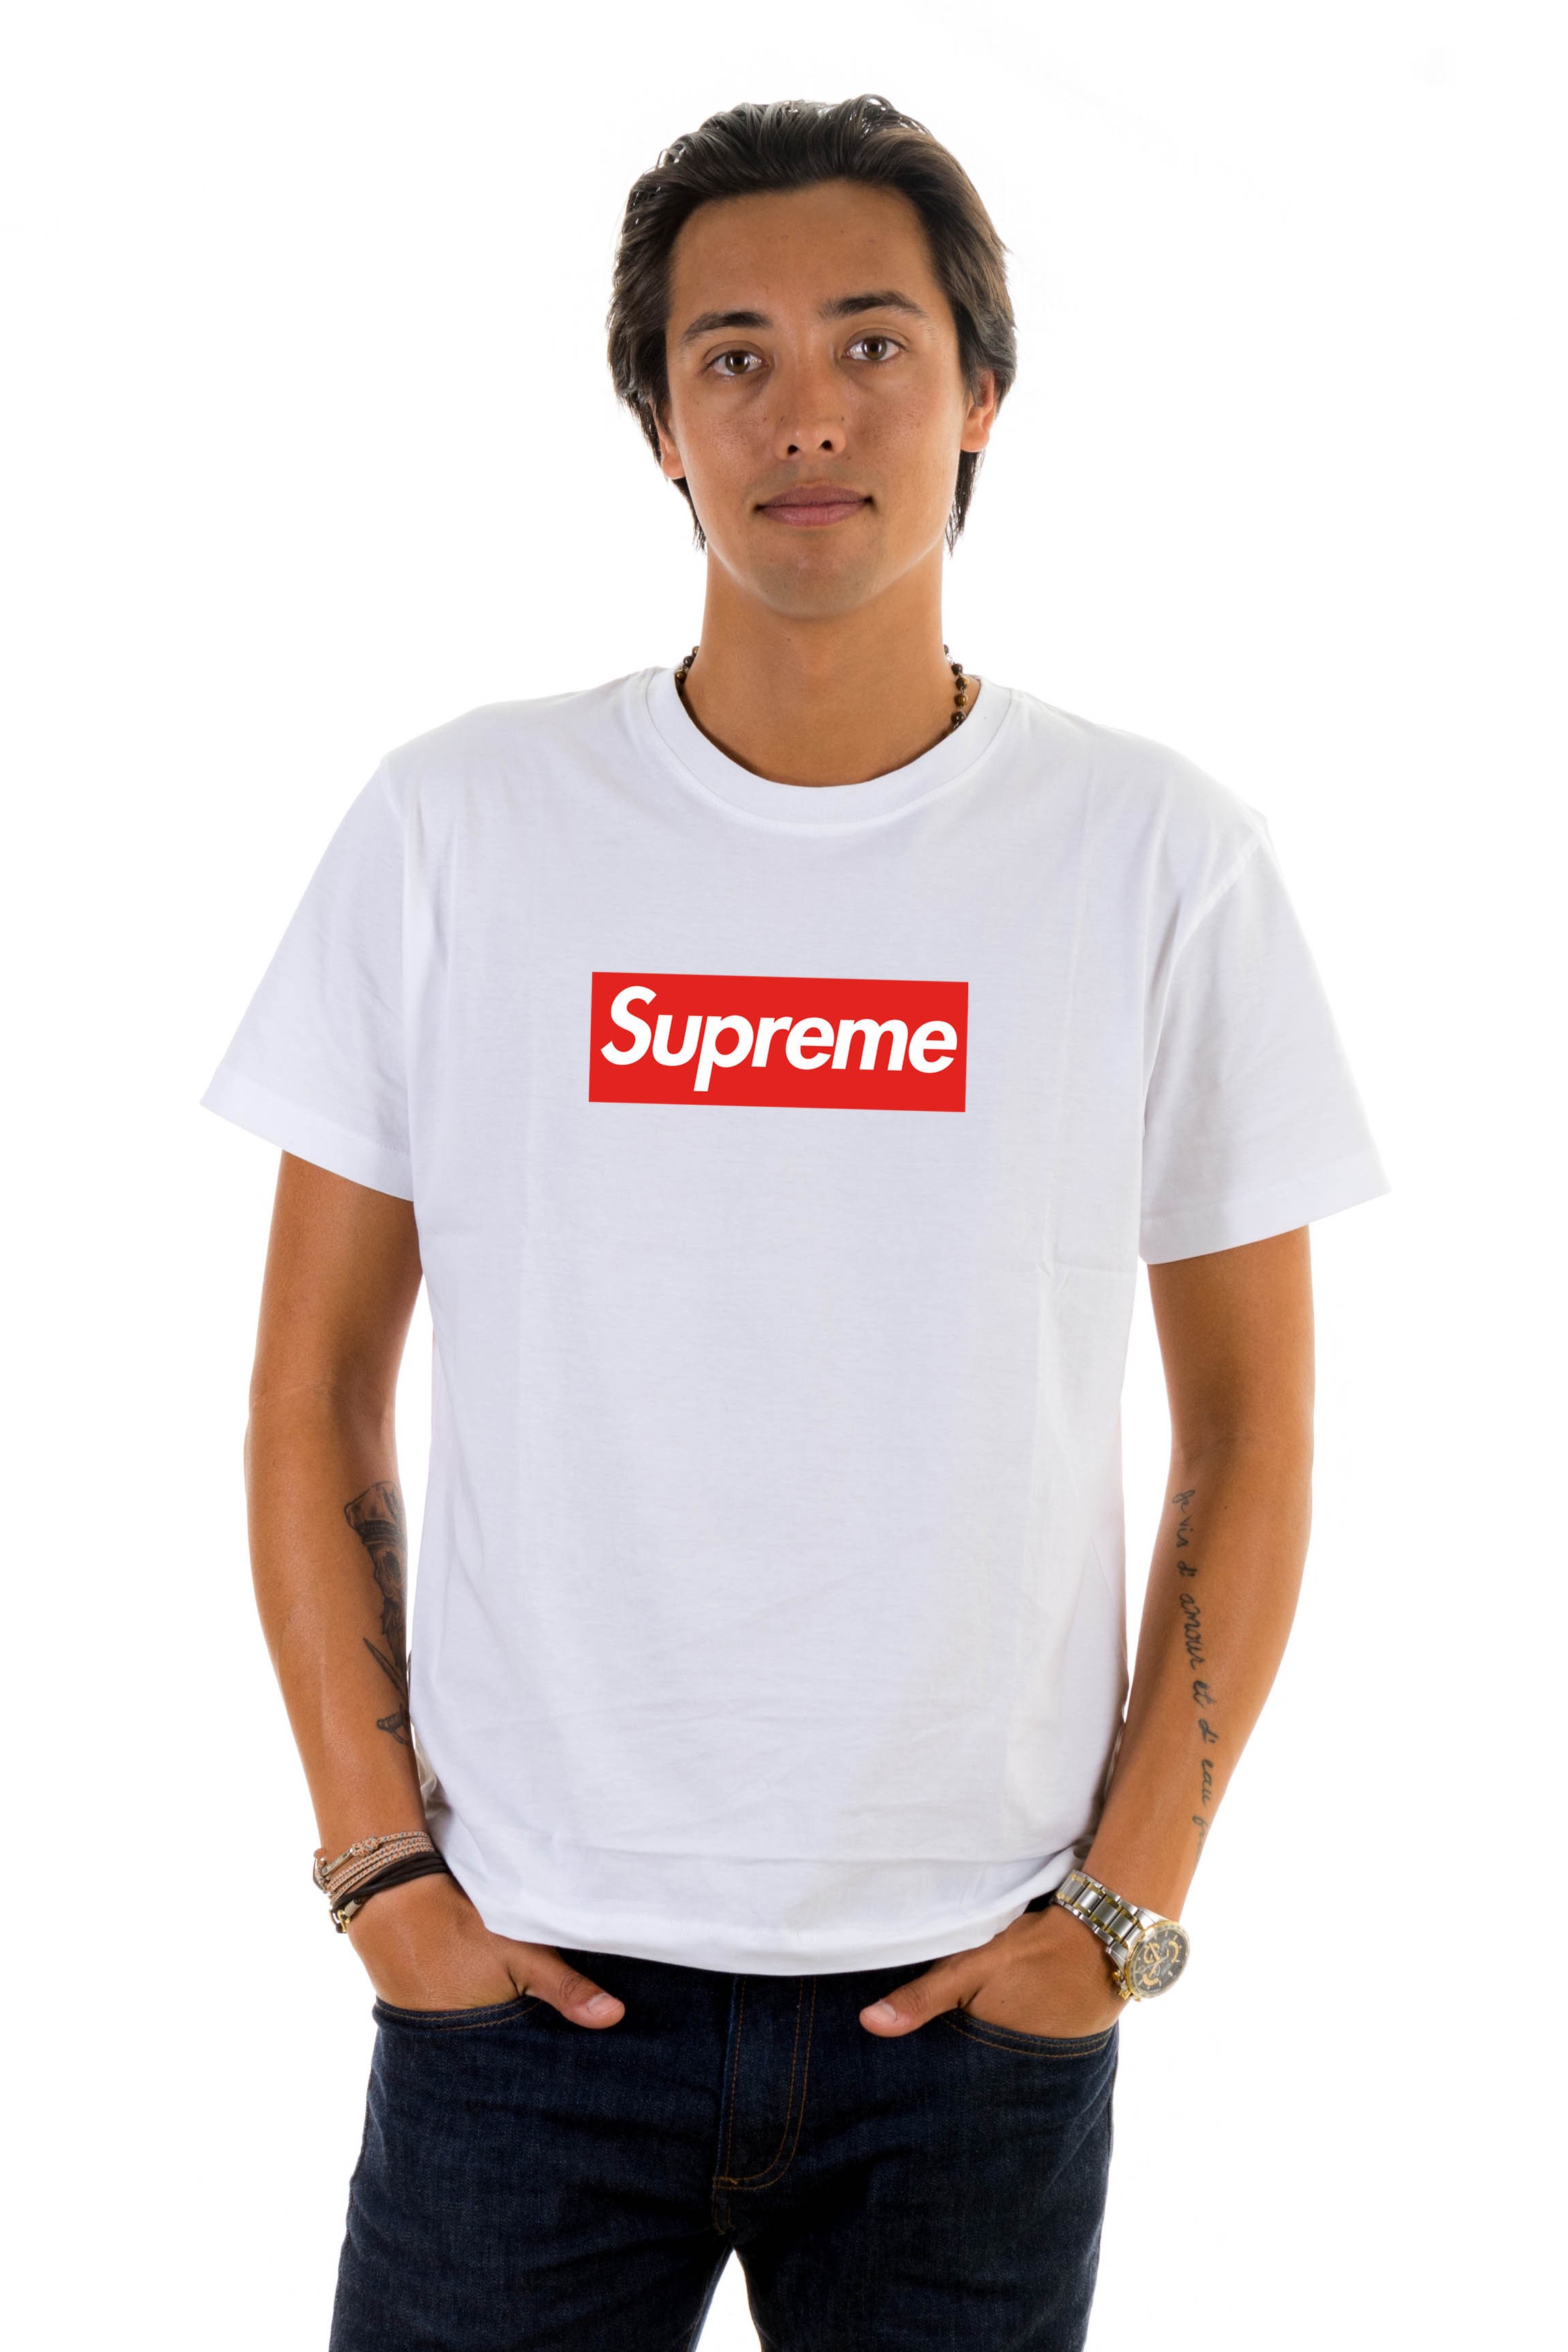 Buy supreme men shirt\u003e OFF-72%